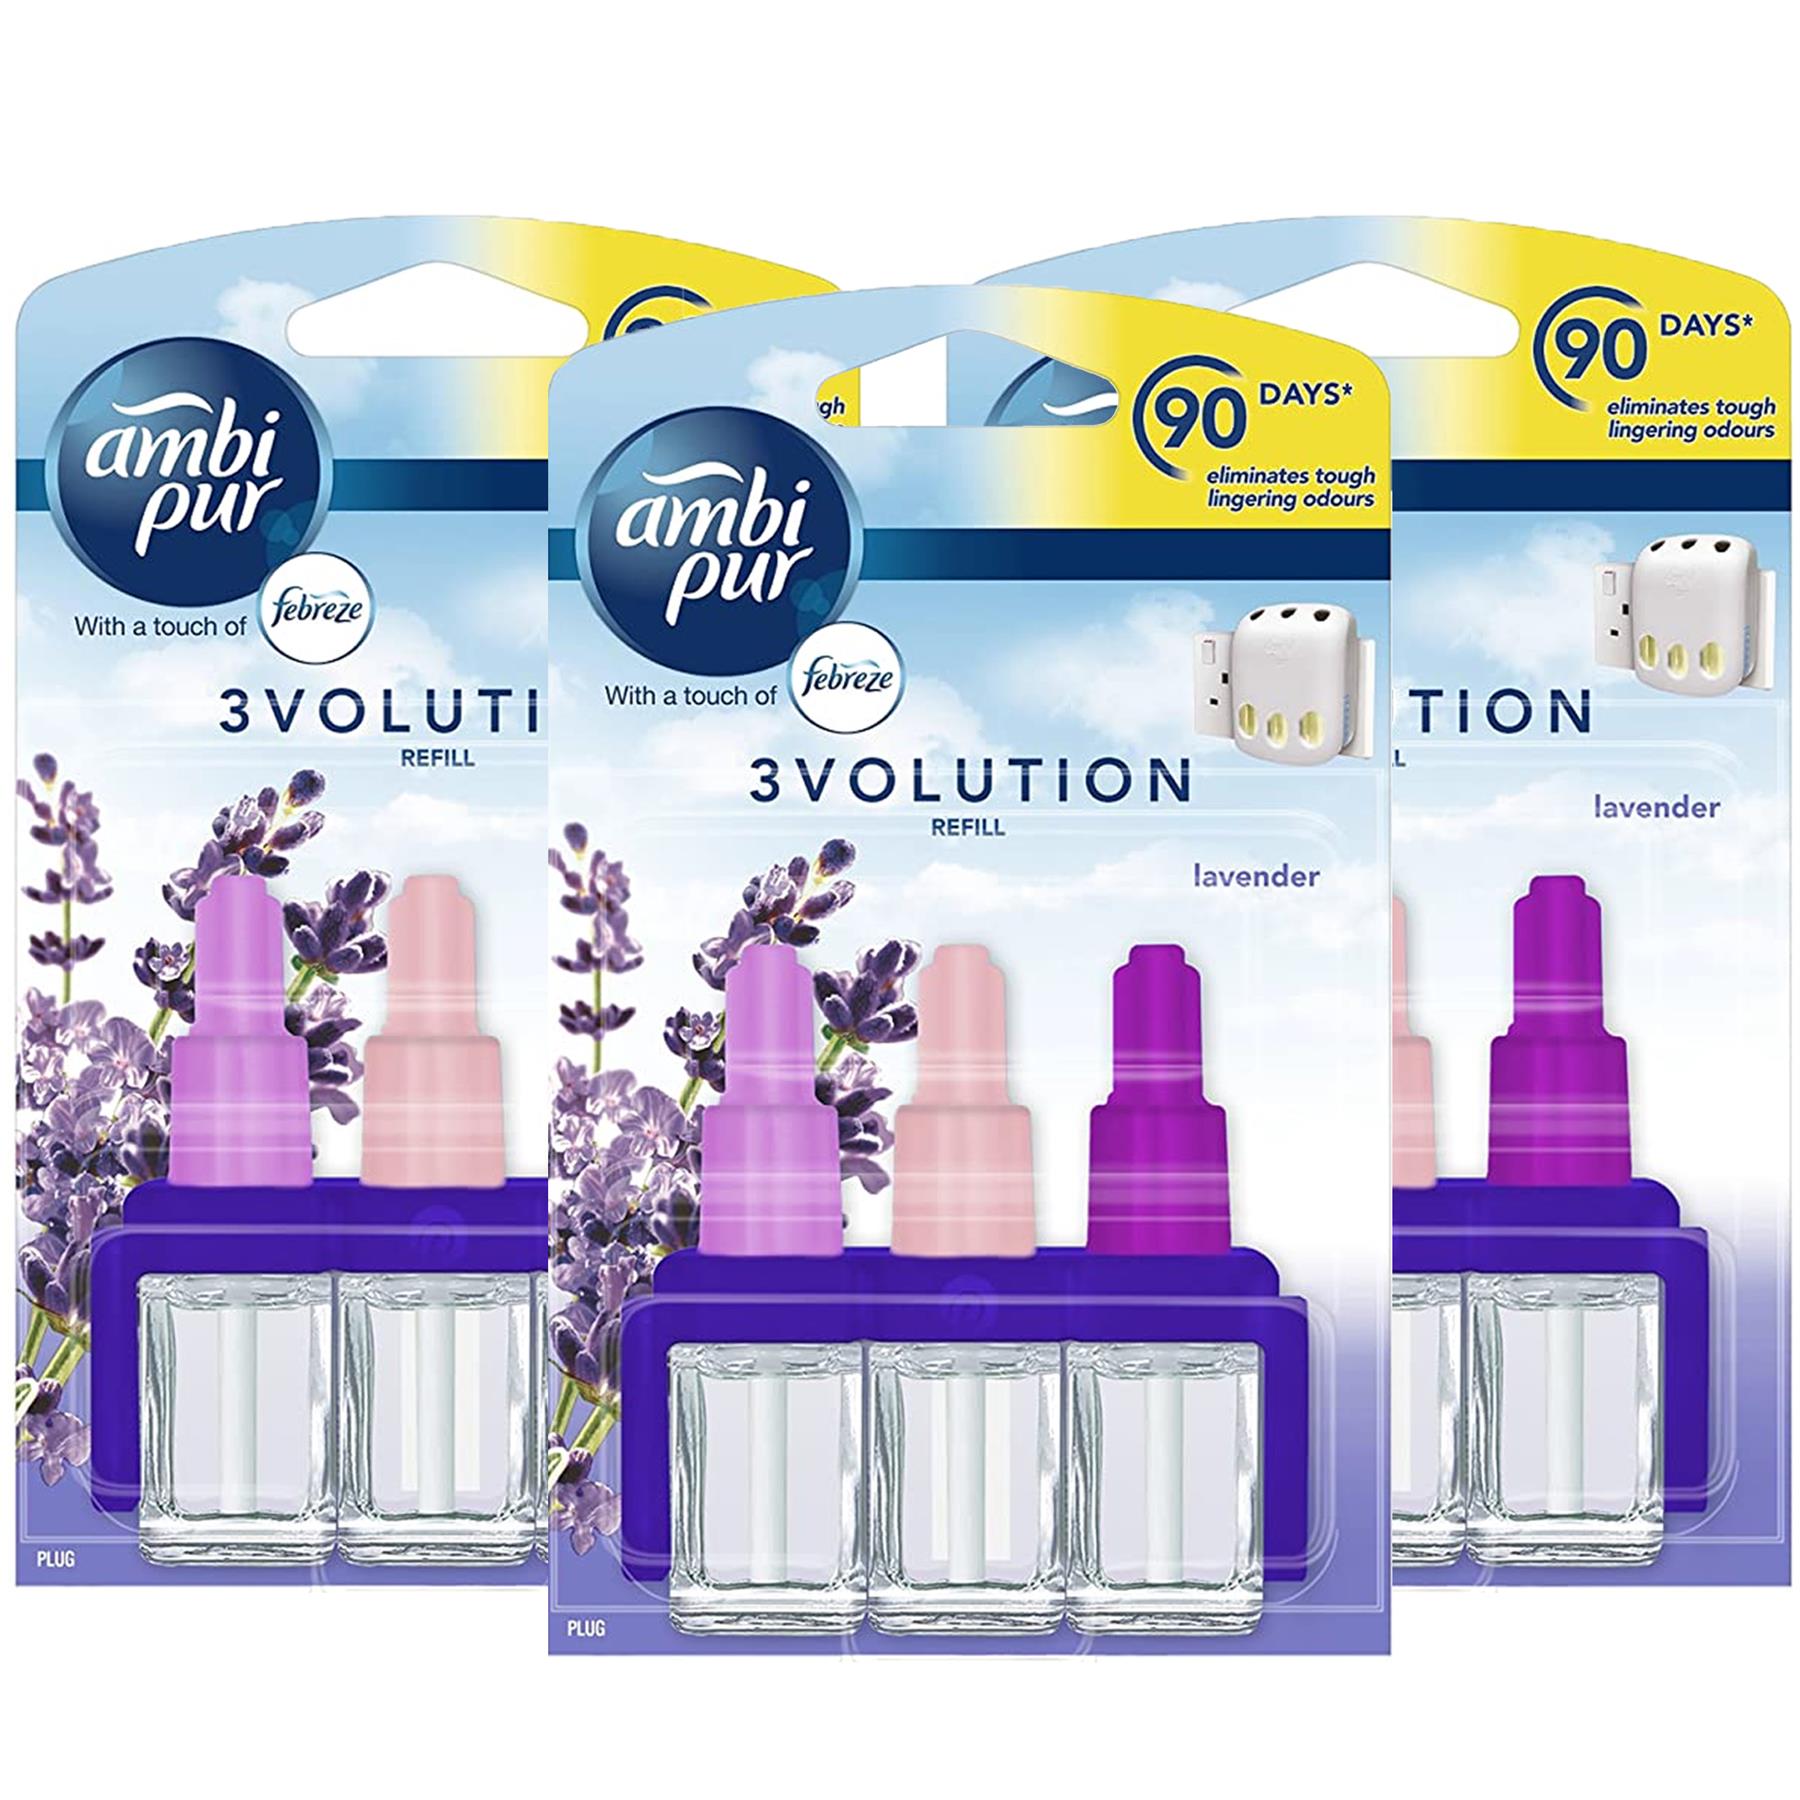 Ambi Pur 3Volution Refill Cotton Fresh, P&G Professional, Brands